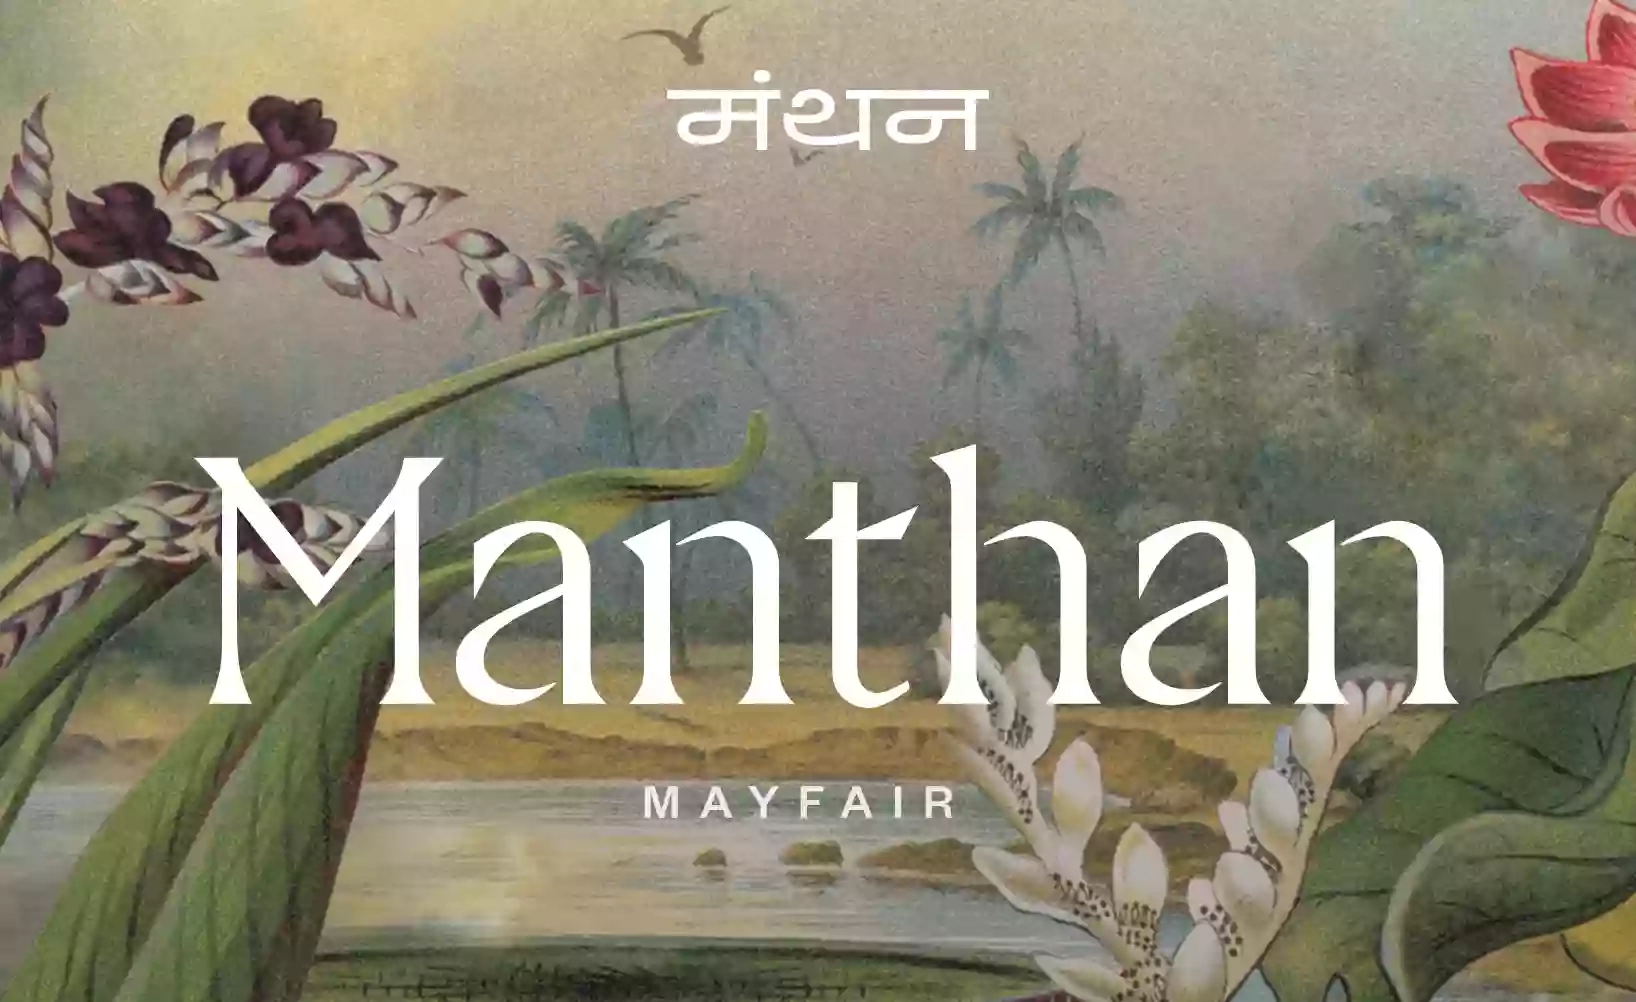 Manthan